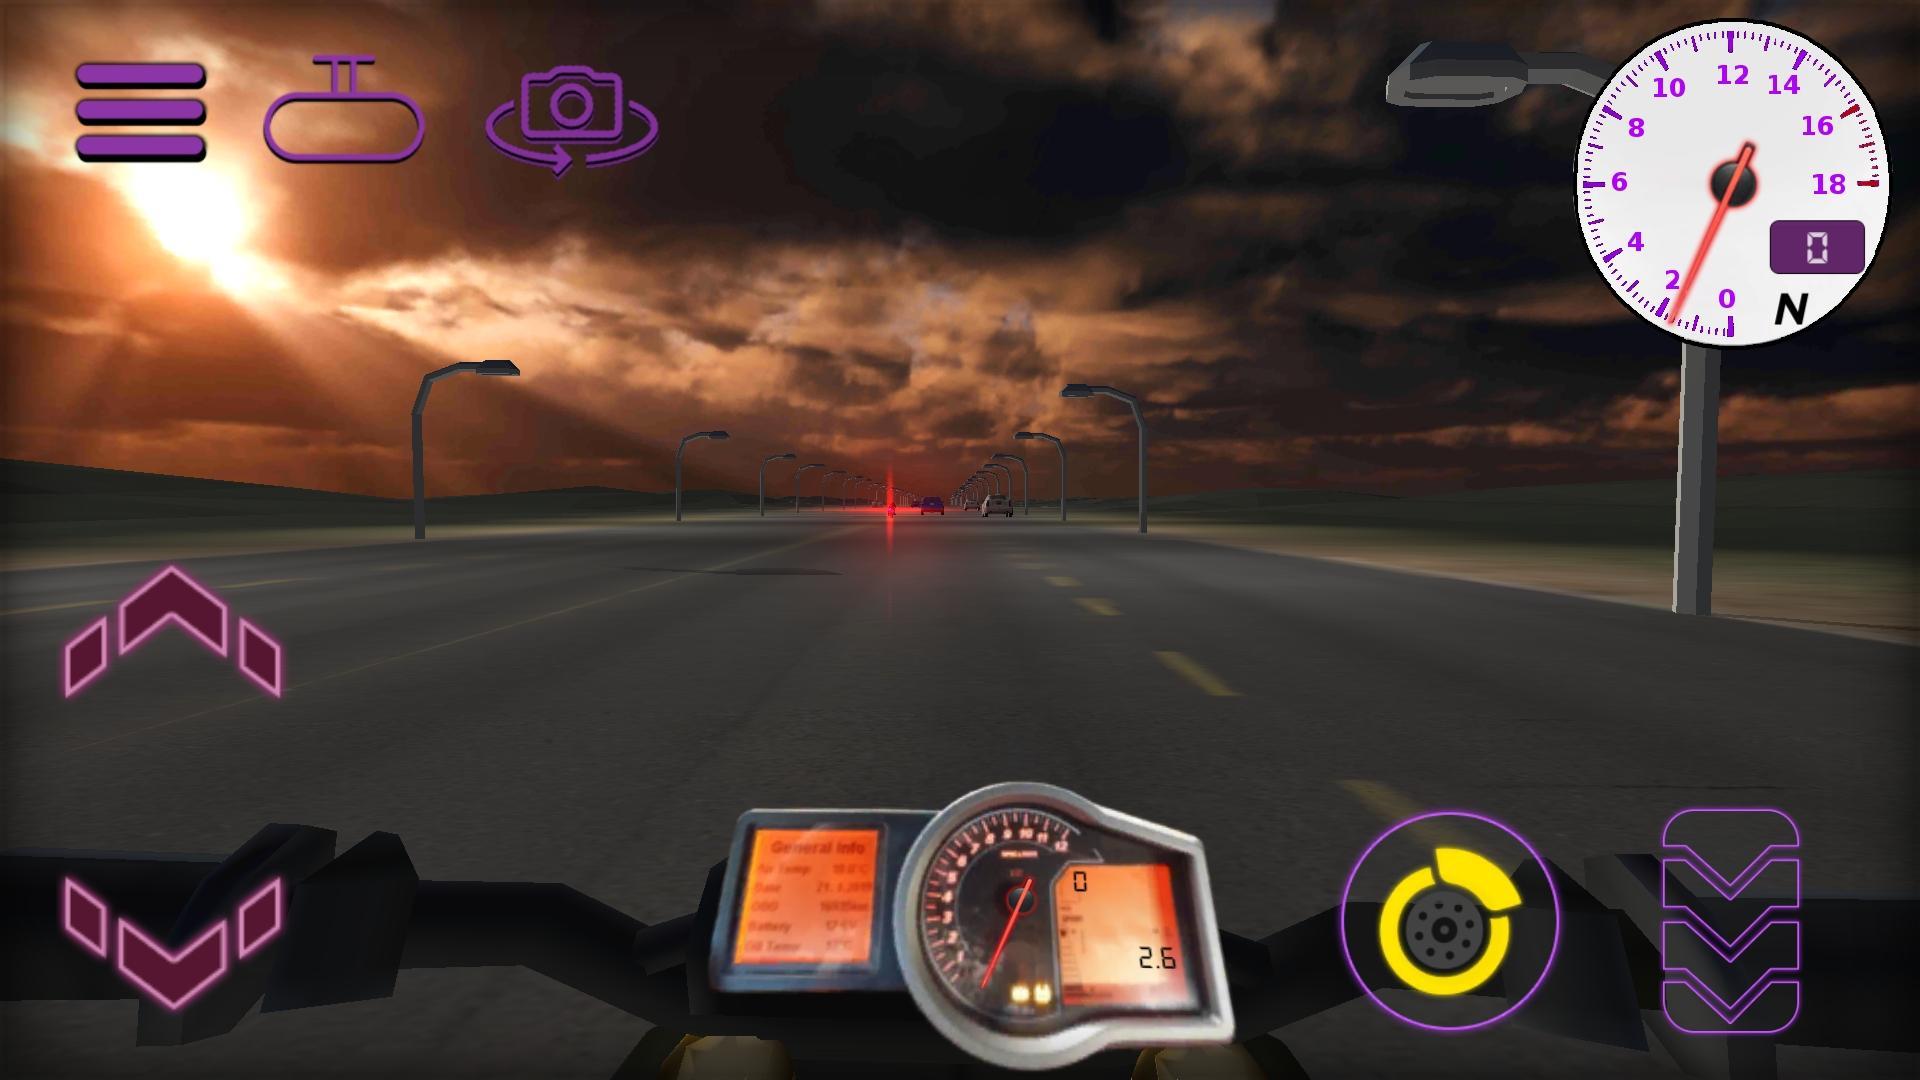 Motorbike Wheelie Challenge. Wheelie Life 3 Mod. Stunt car Challenge 3 – money Mod APK. Stunt car Challenge 3 screenshots about screenshots 5.